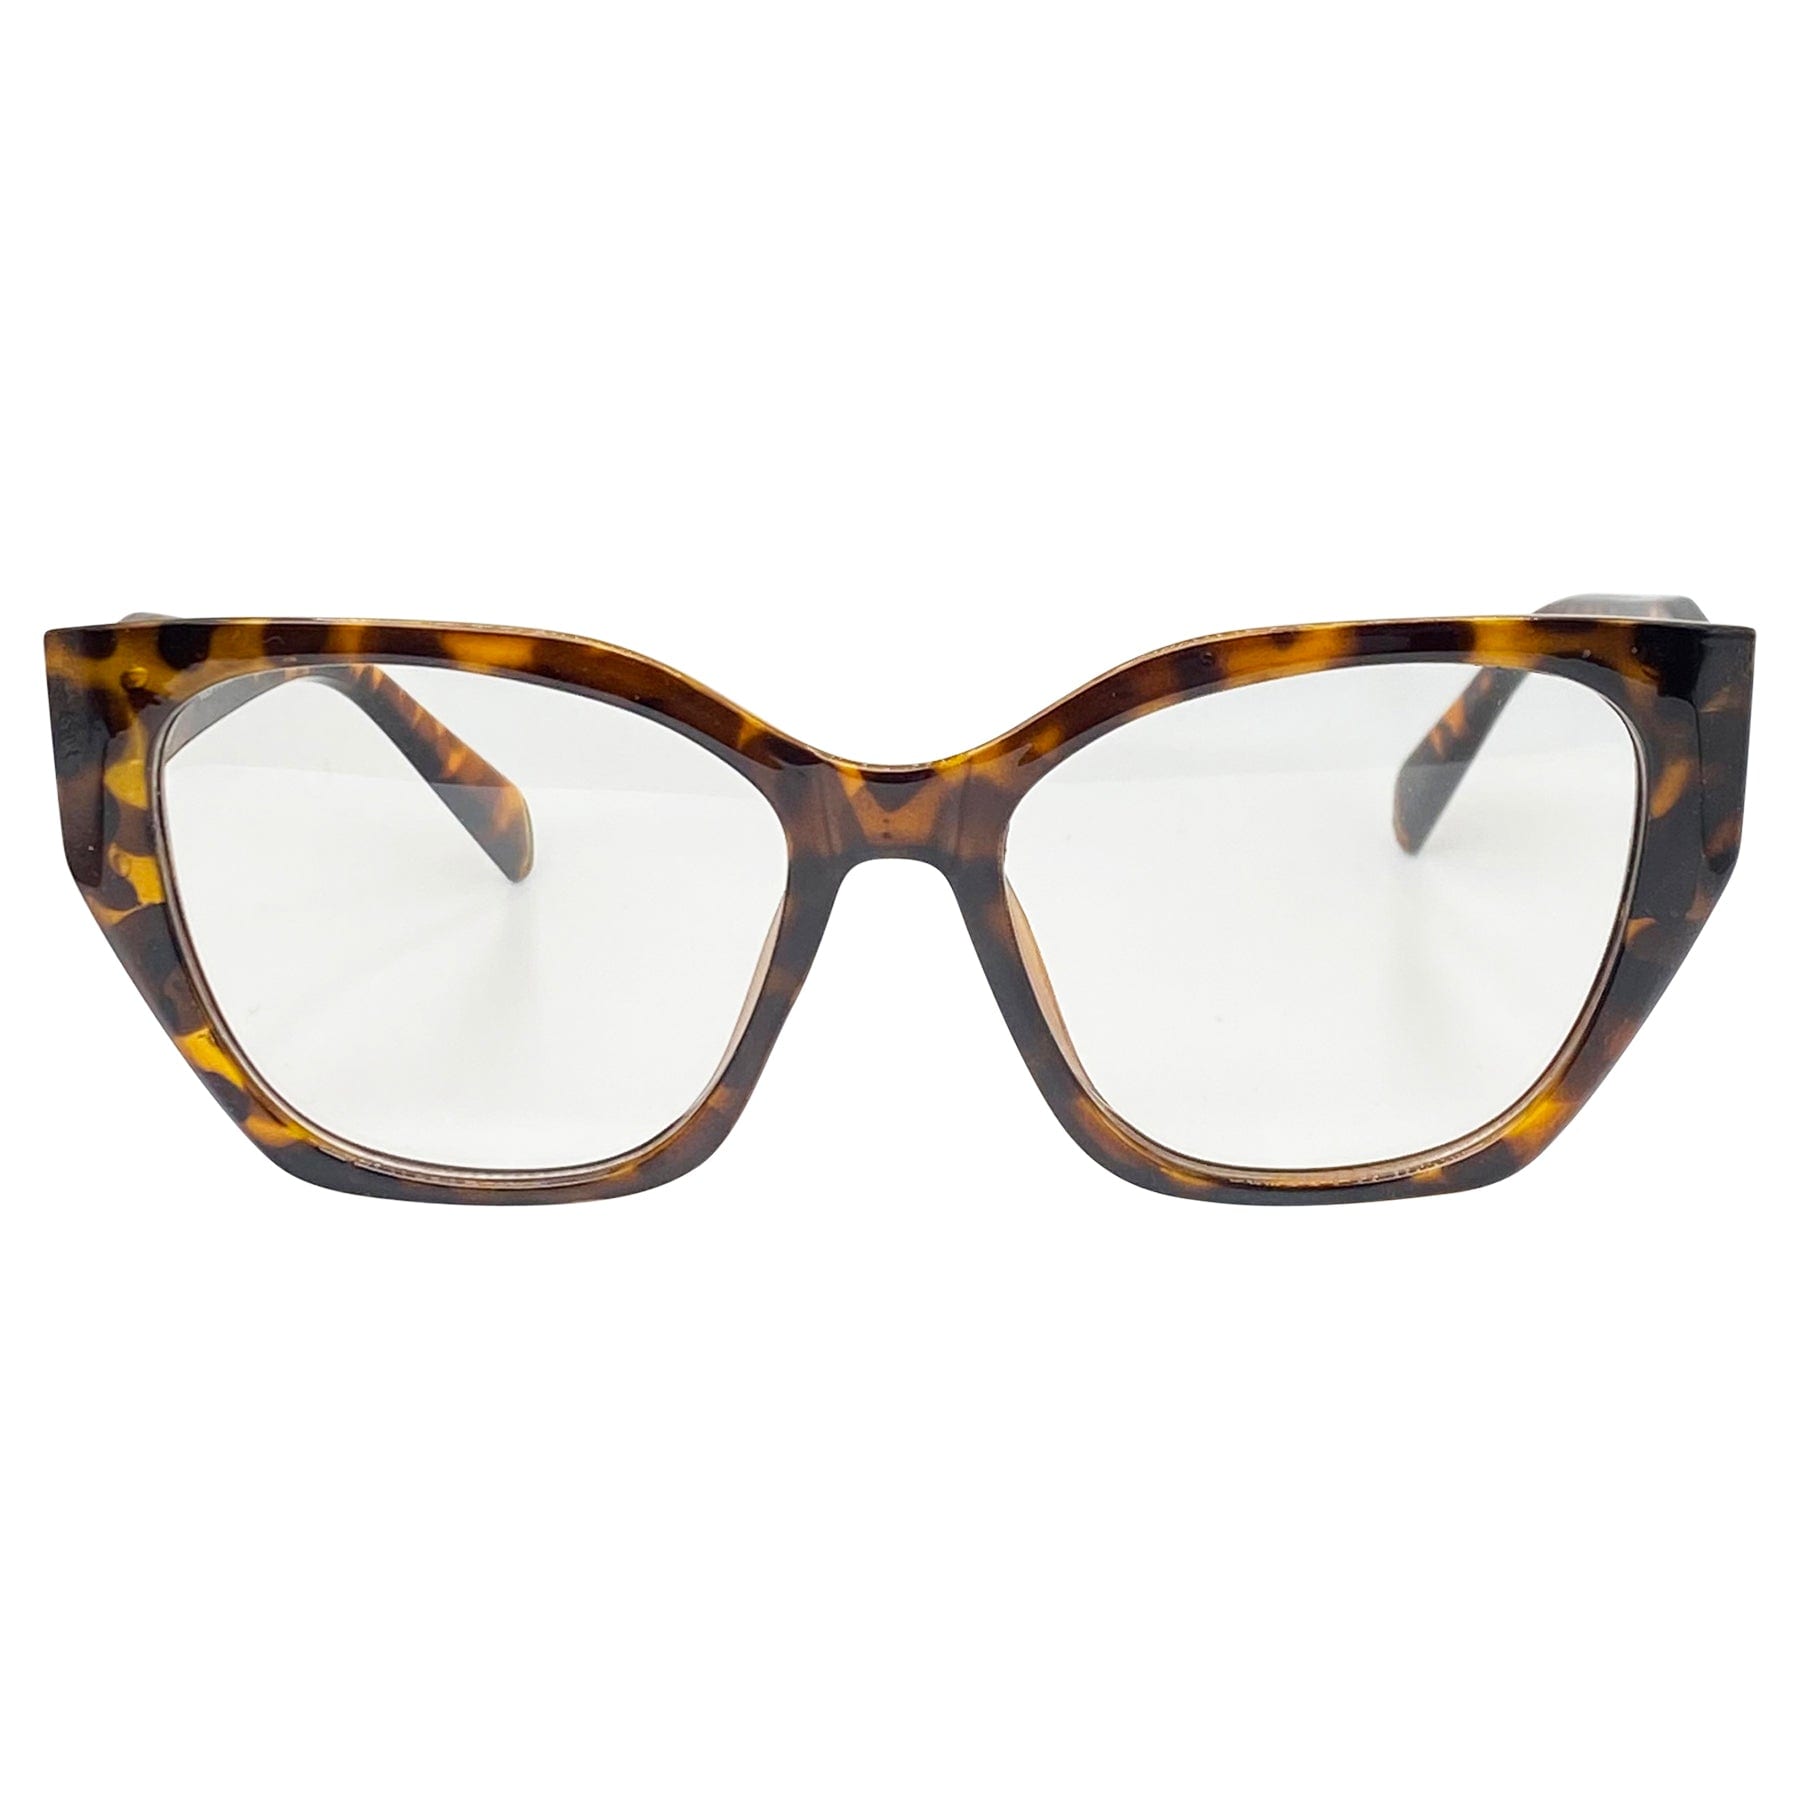 big glasses with an angular cat eye shaped tortoise frame